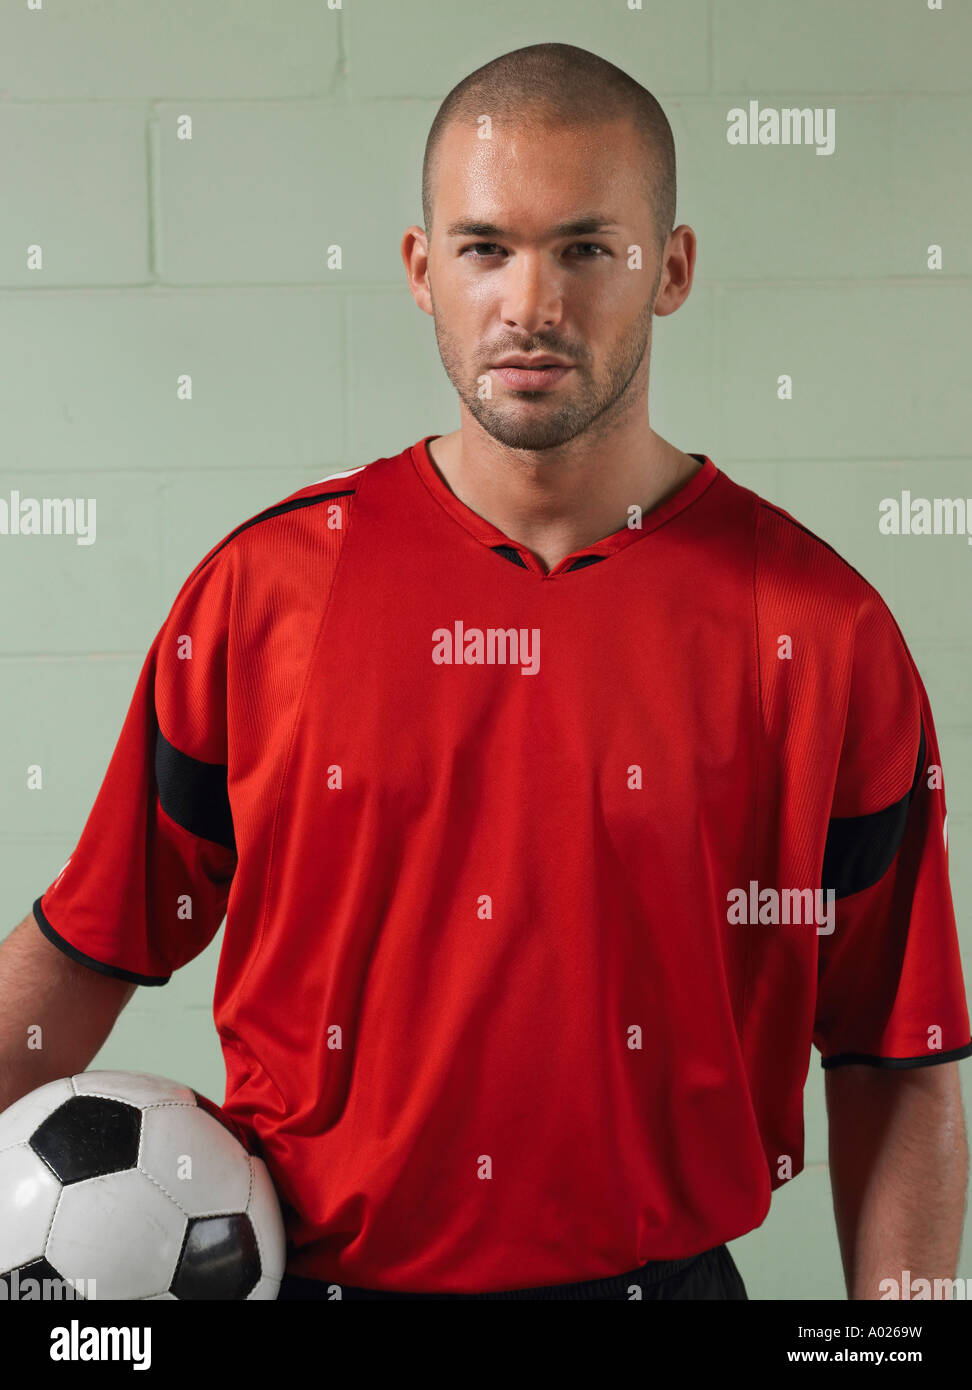 Soccer player holding ball, portrait Stock Photo